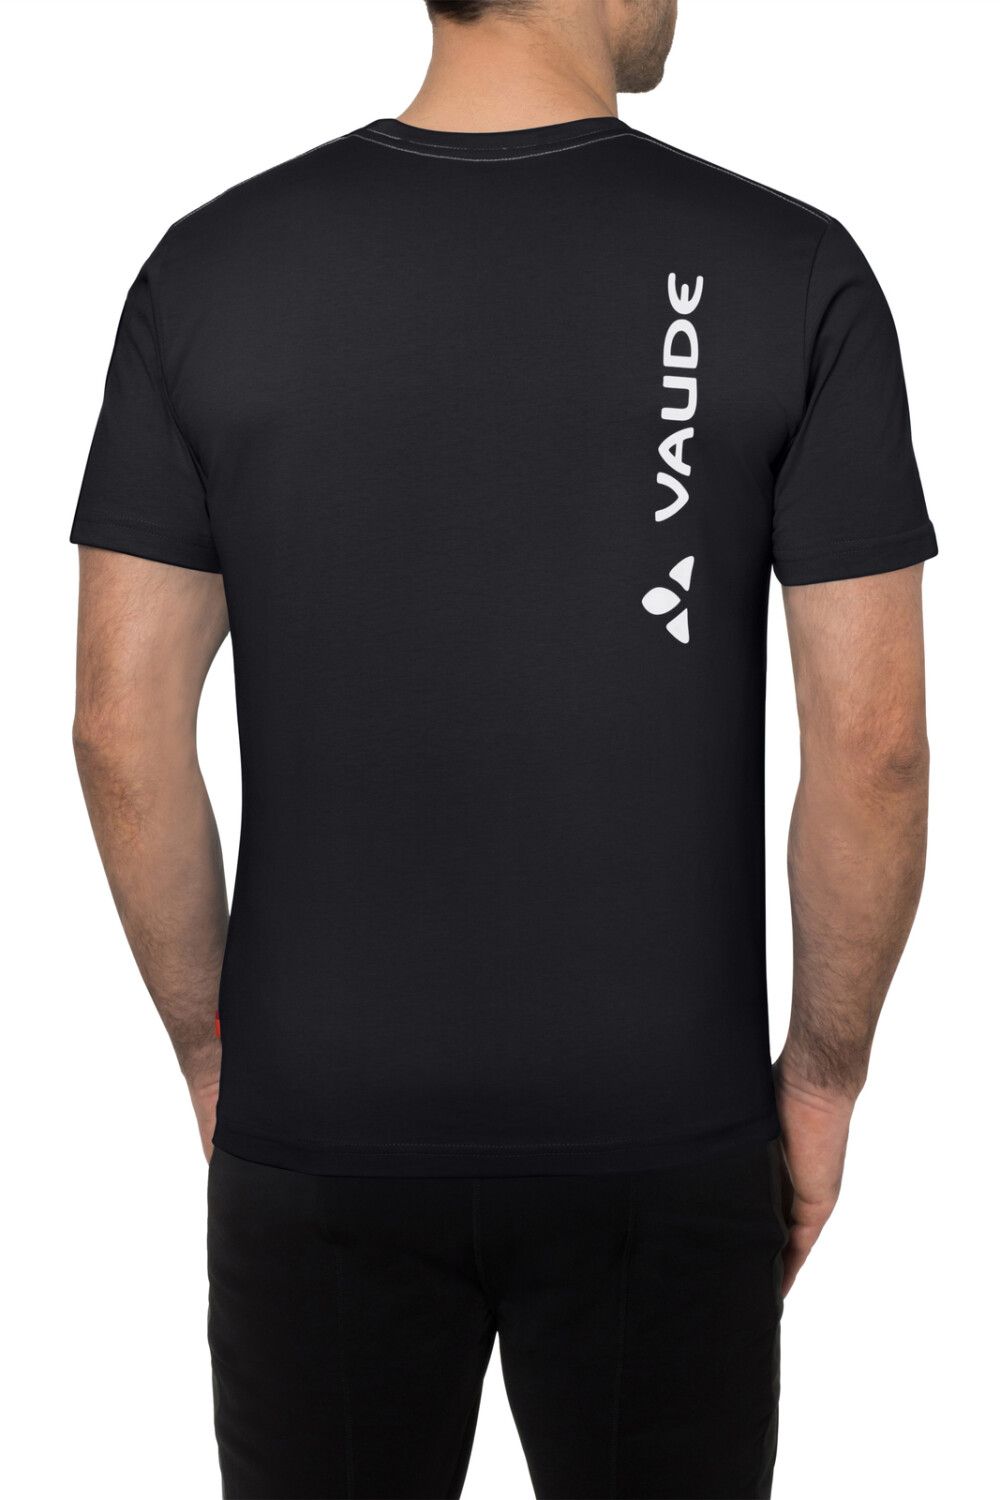 VAUDE Men's Brand T-Shirt (Bild 7)